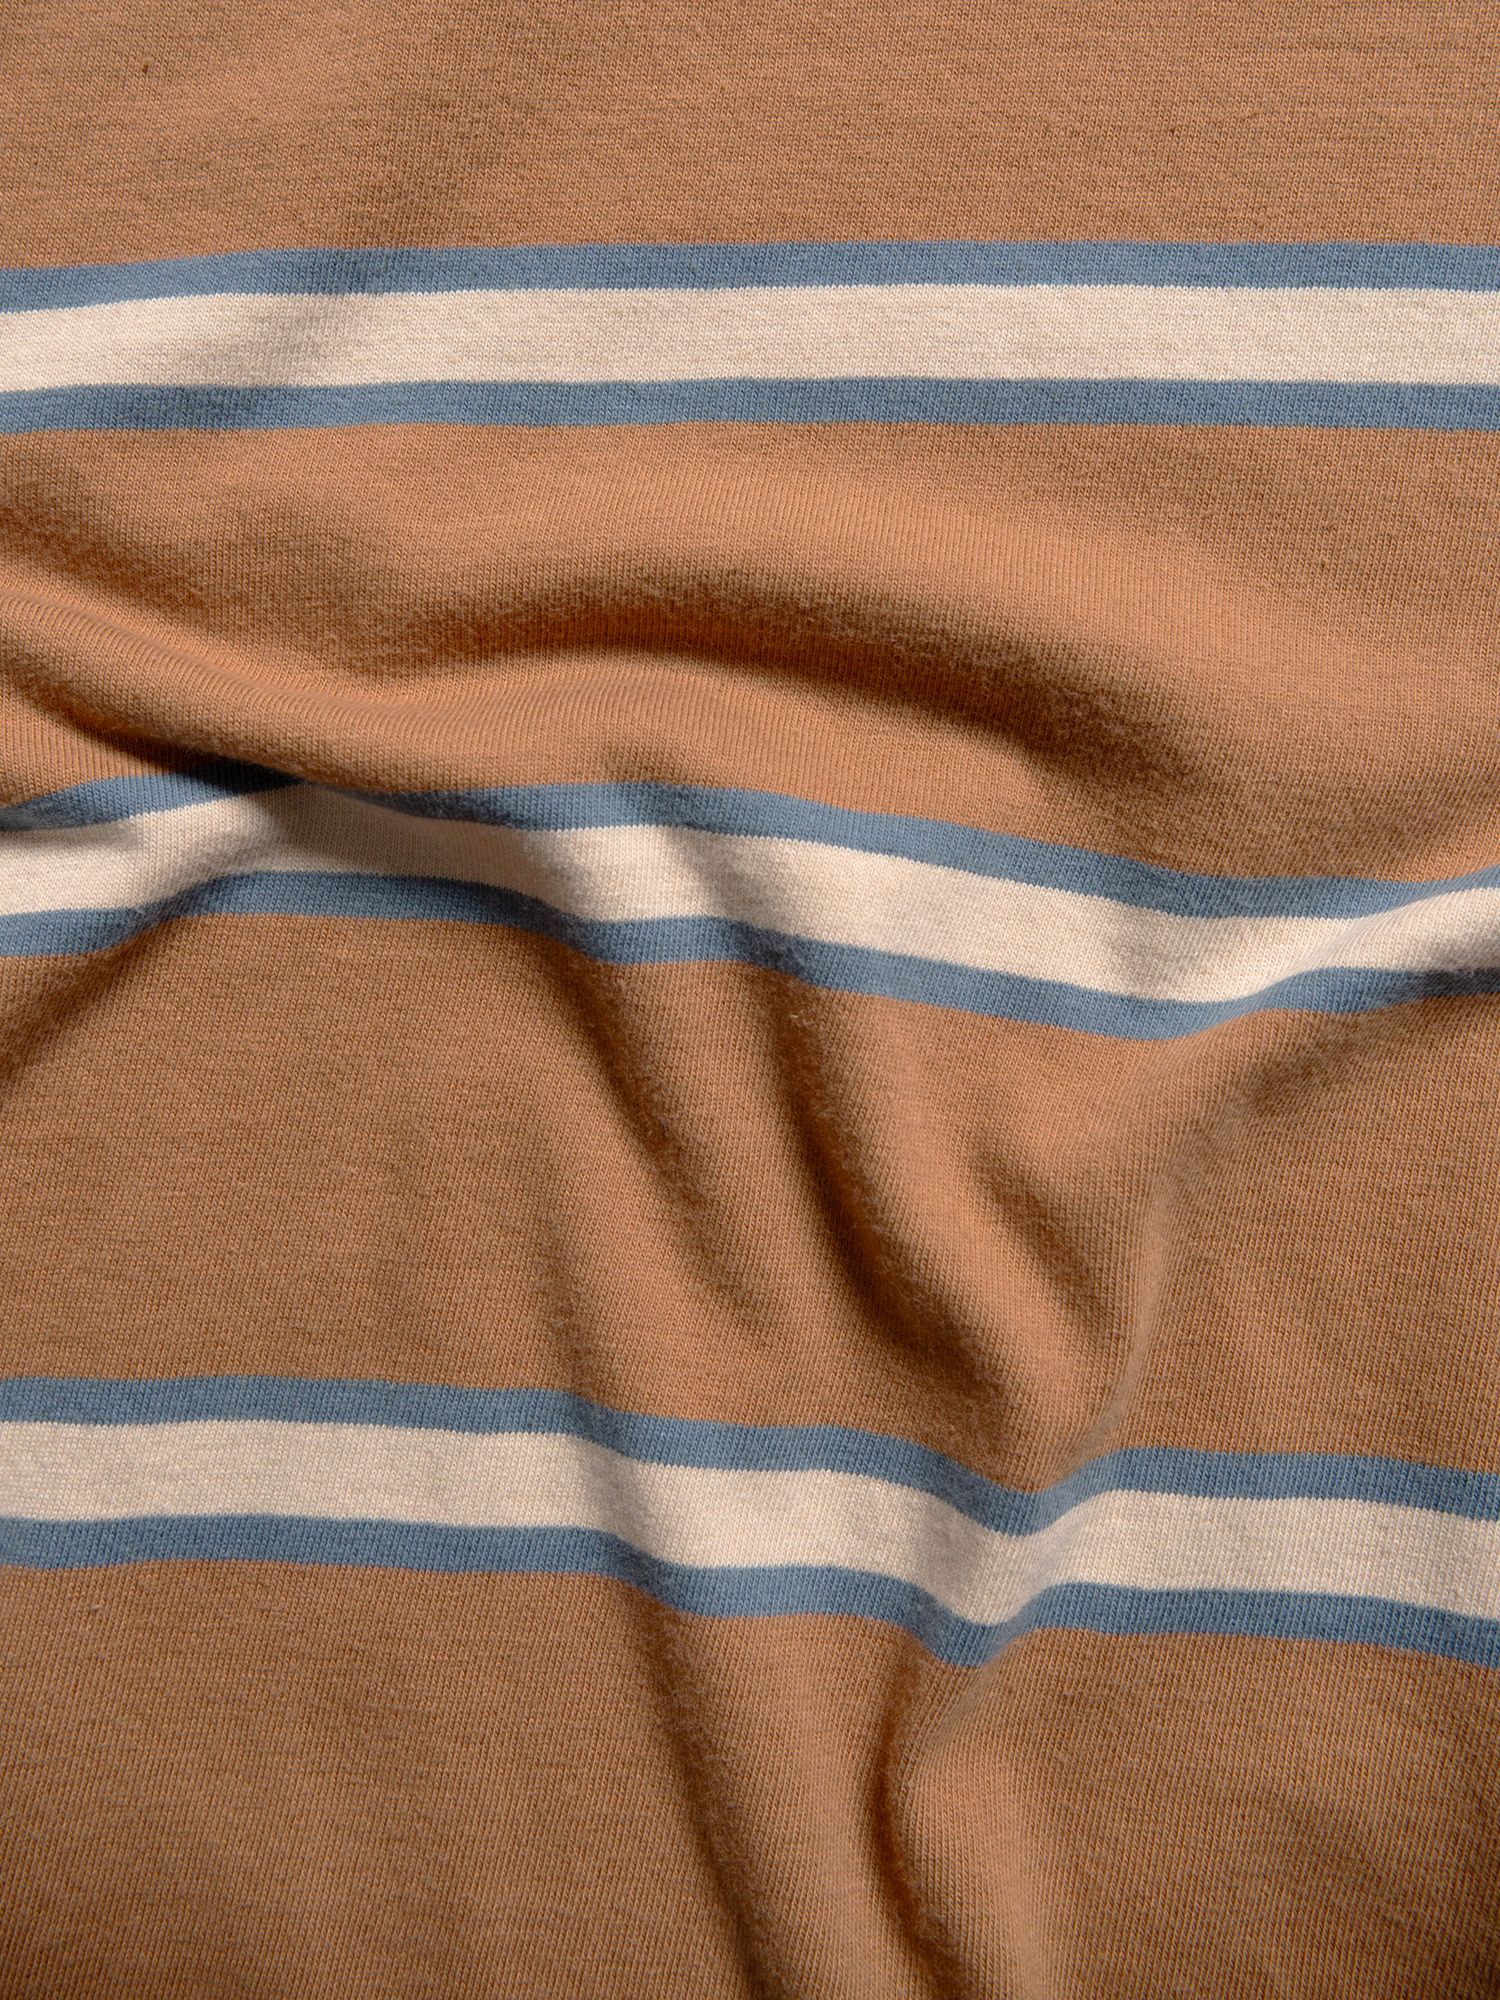 Nudie Jeans Leffe Stripe T-Shirt, Brown/White, XL